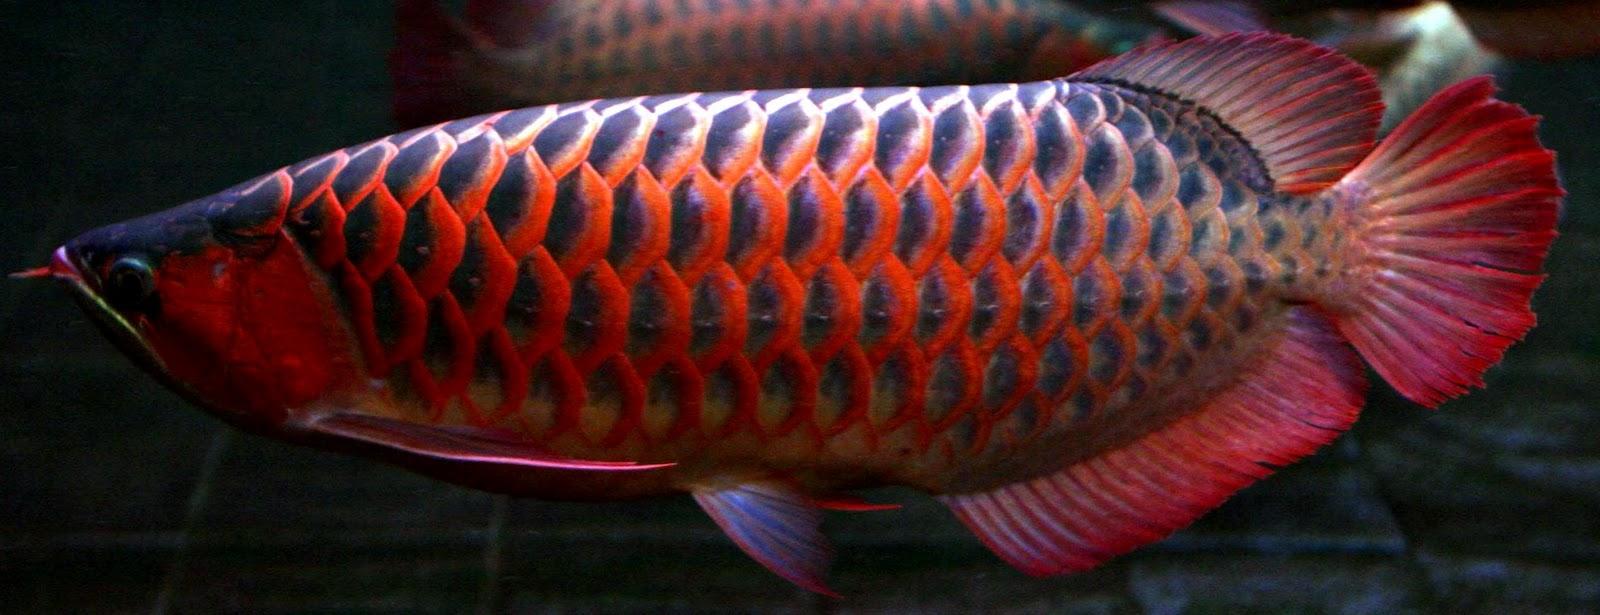 Red Arowana Fish Wallpaper #traffic Club